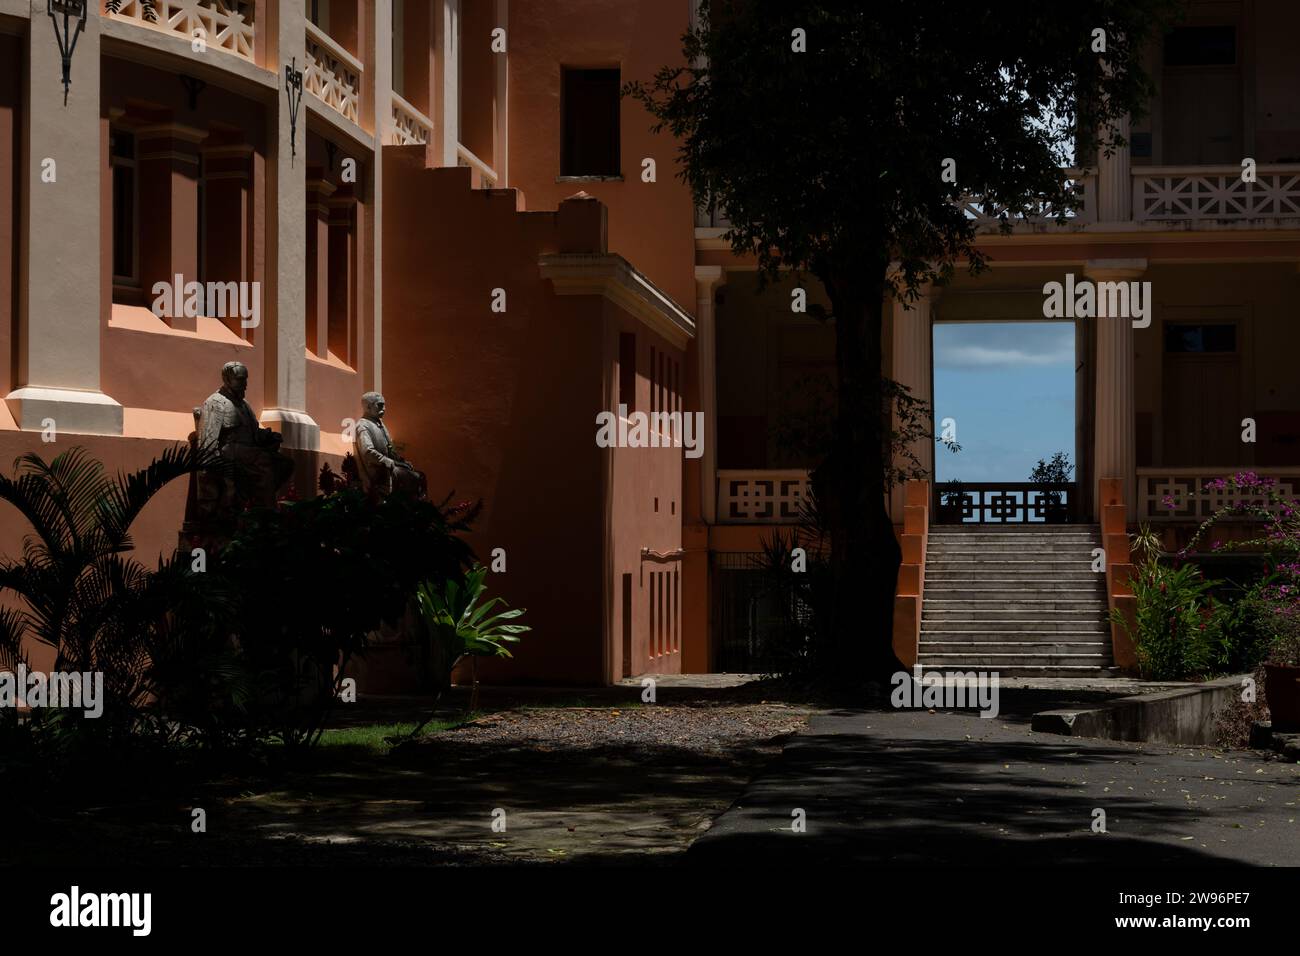 Salvador, Bahia, Brasilien - 07. März 2015: Blick auf die Fassade des alten Medizinstudiums in der Stadt Salvador, Bahia. Stockfoto